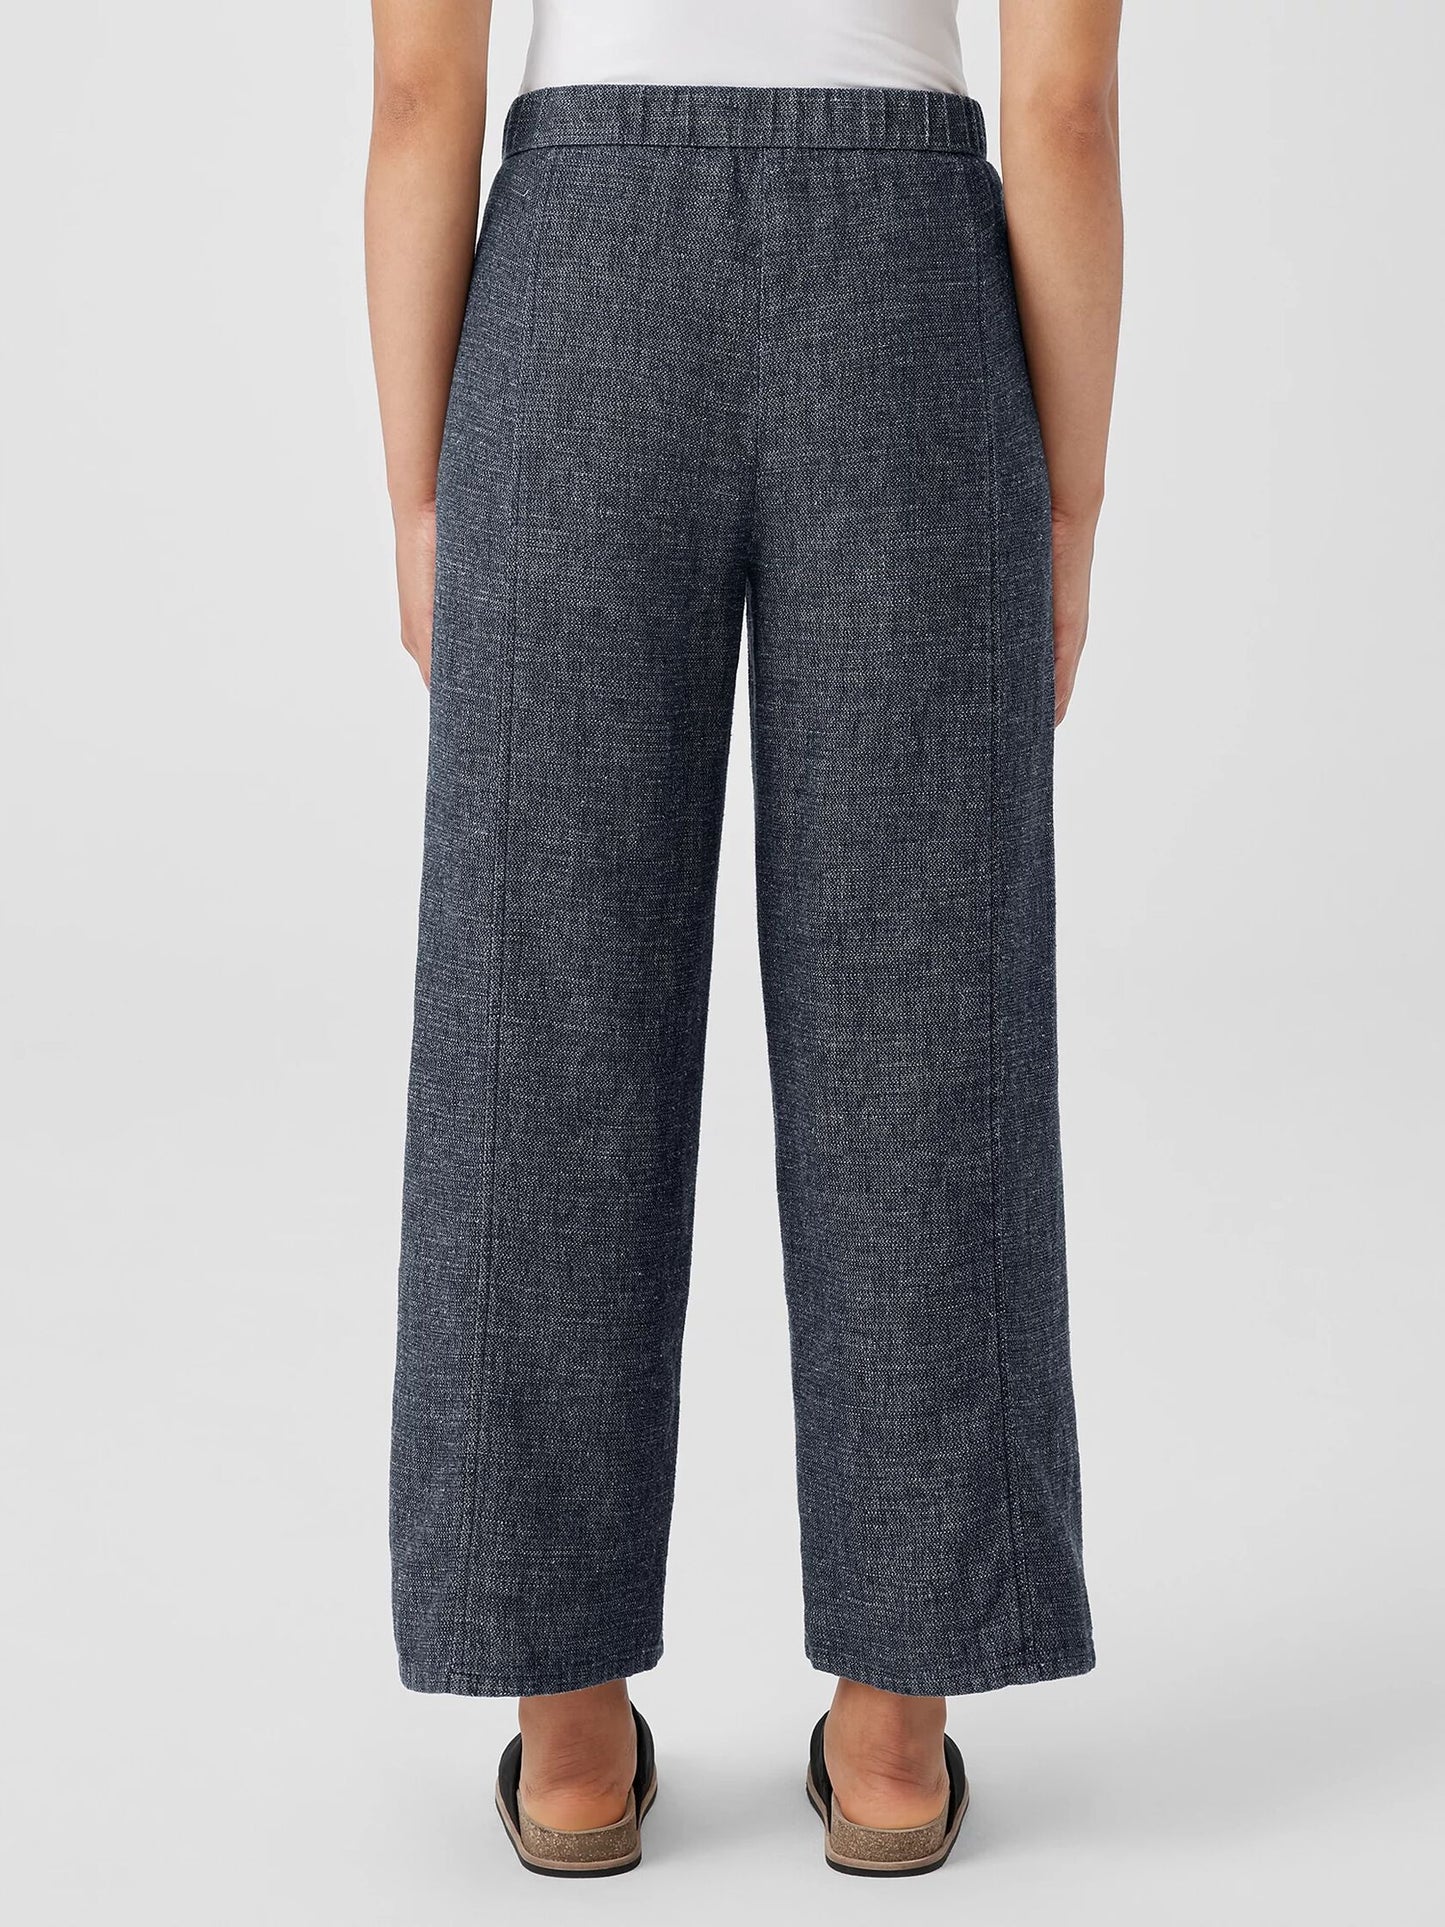 Eileen Fisher Tweed Hemp Cotton Wide Leg Pant